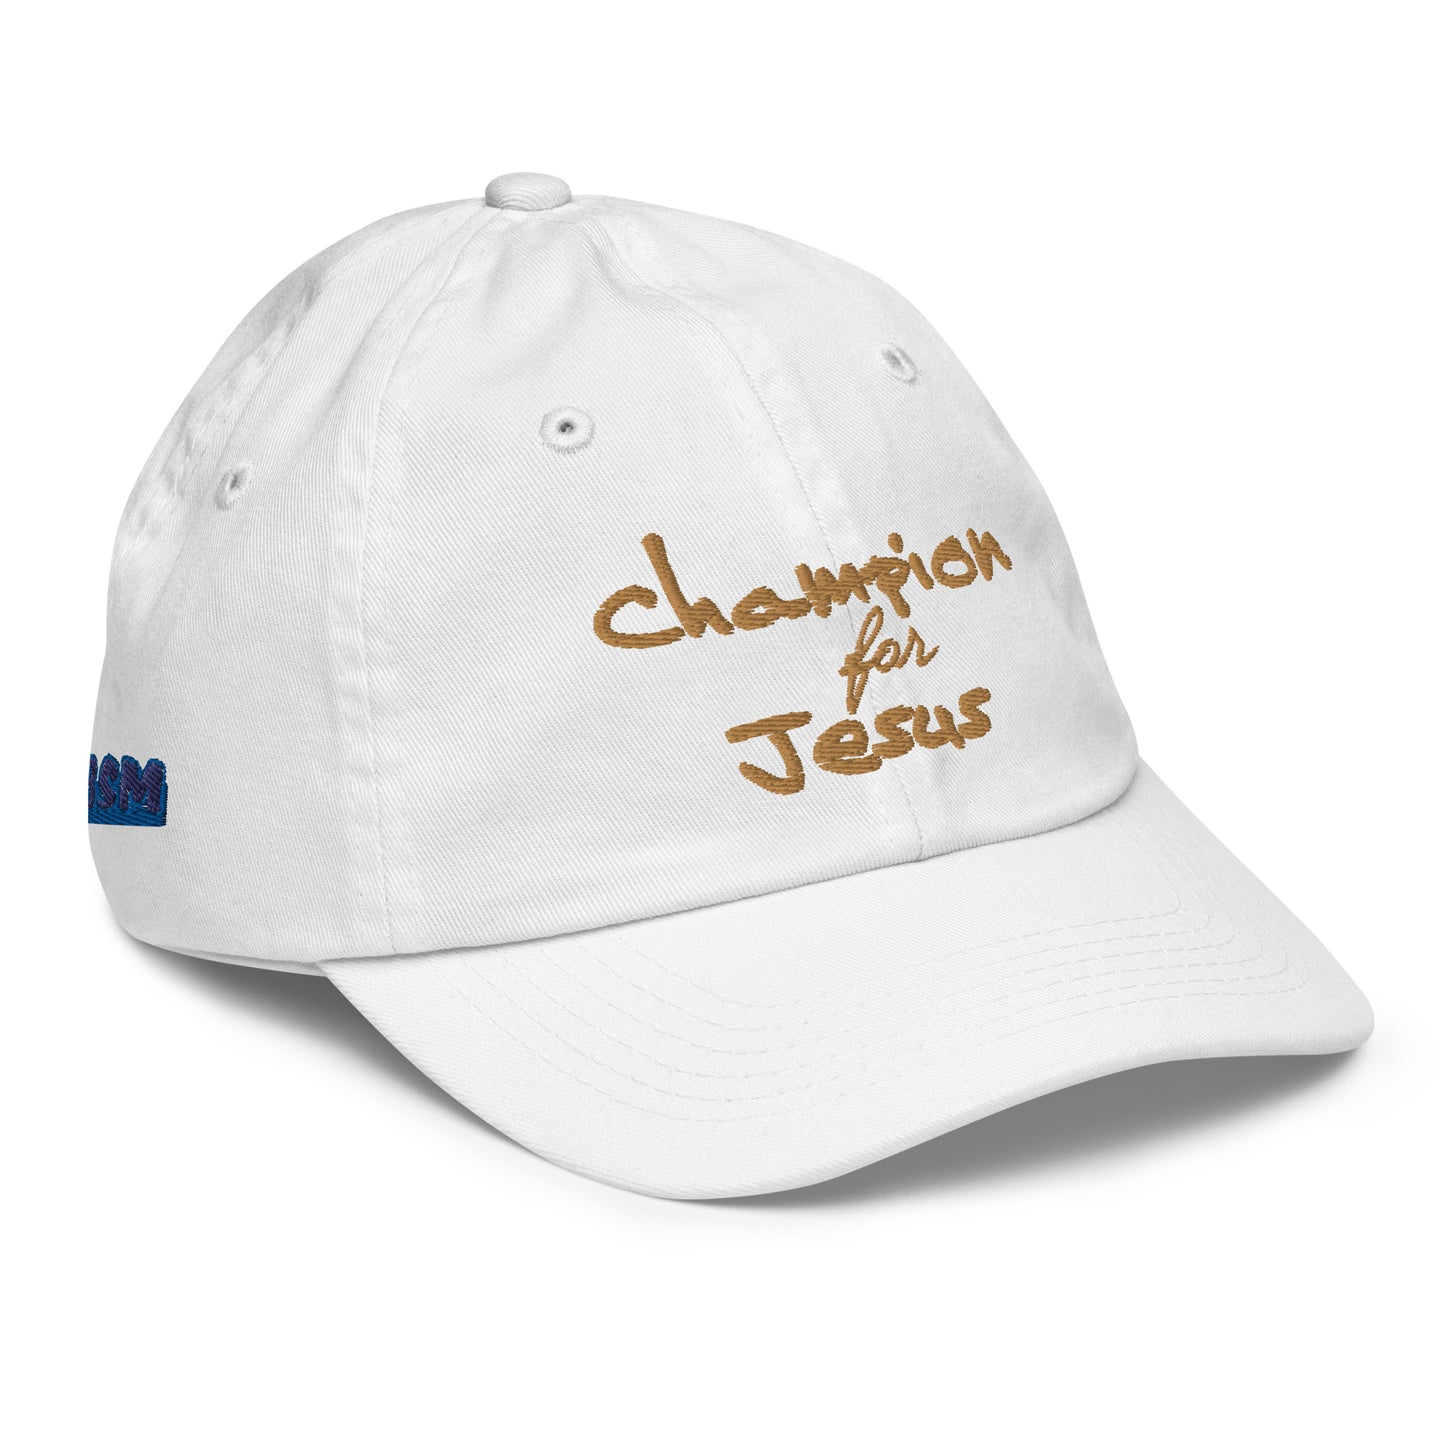 Champion for Jesus Kids Baseball Cap